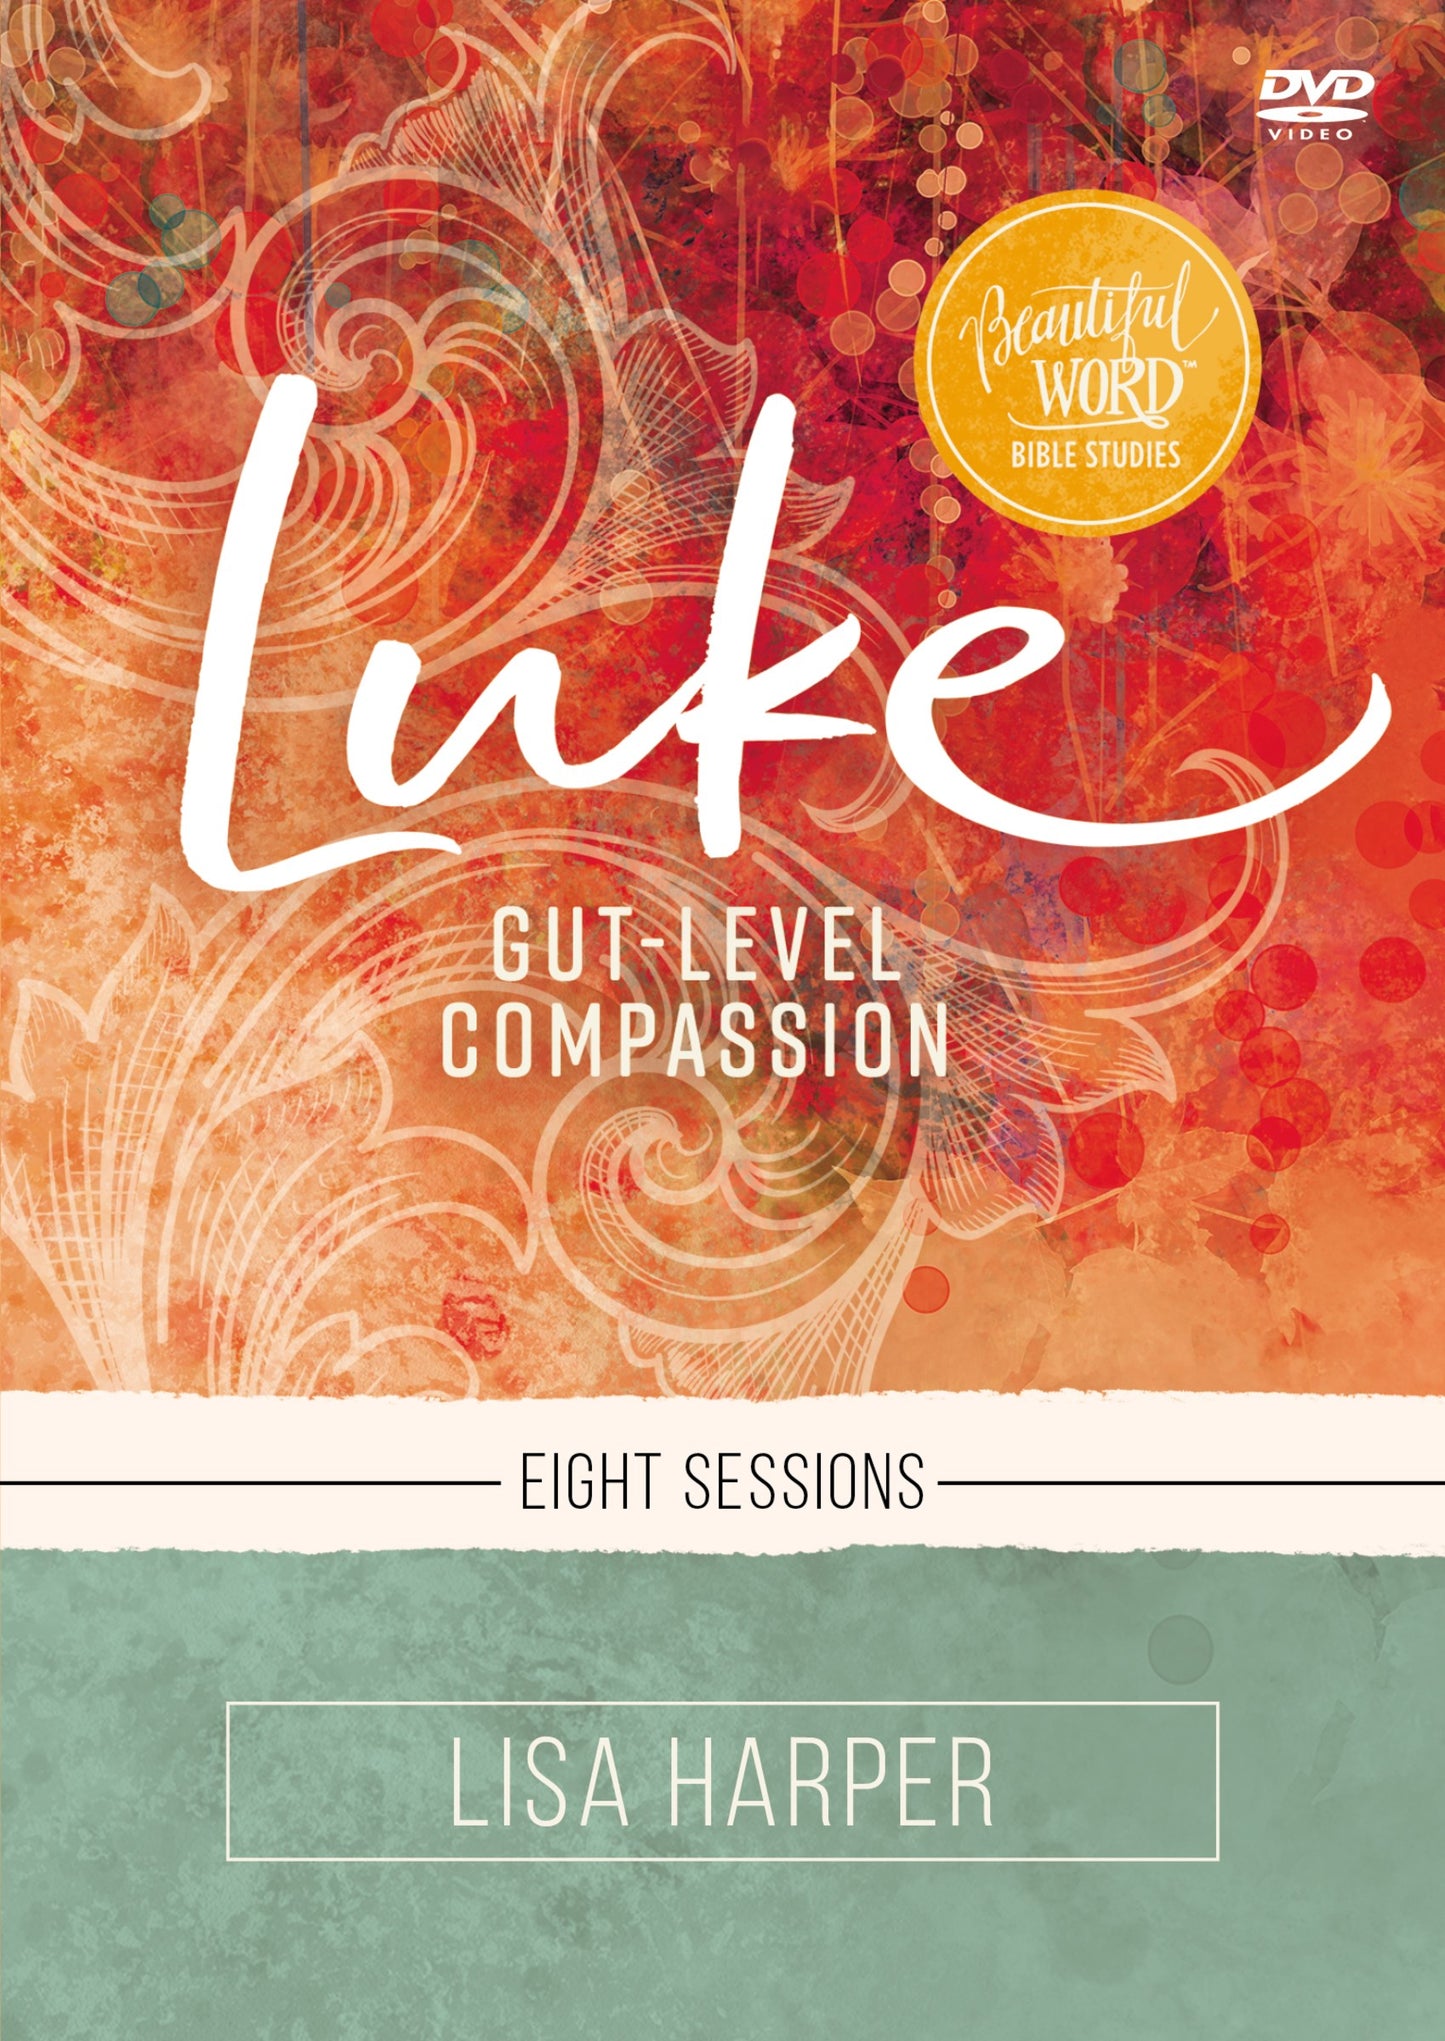 DVD-Luke Video Study (Beautiful Word Bible Studies)